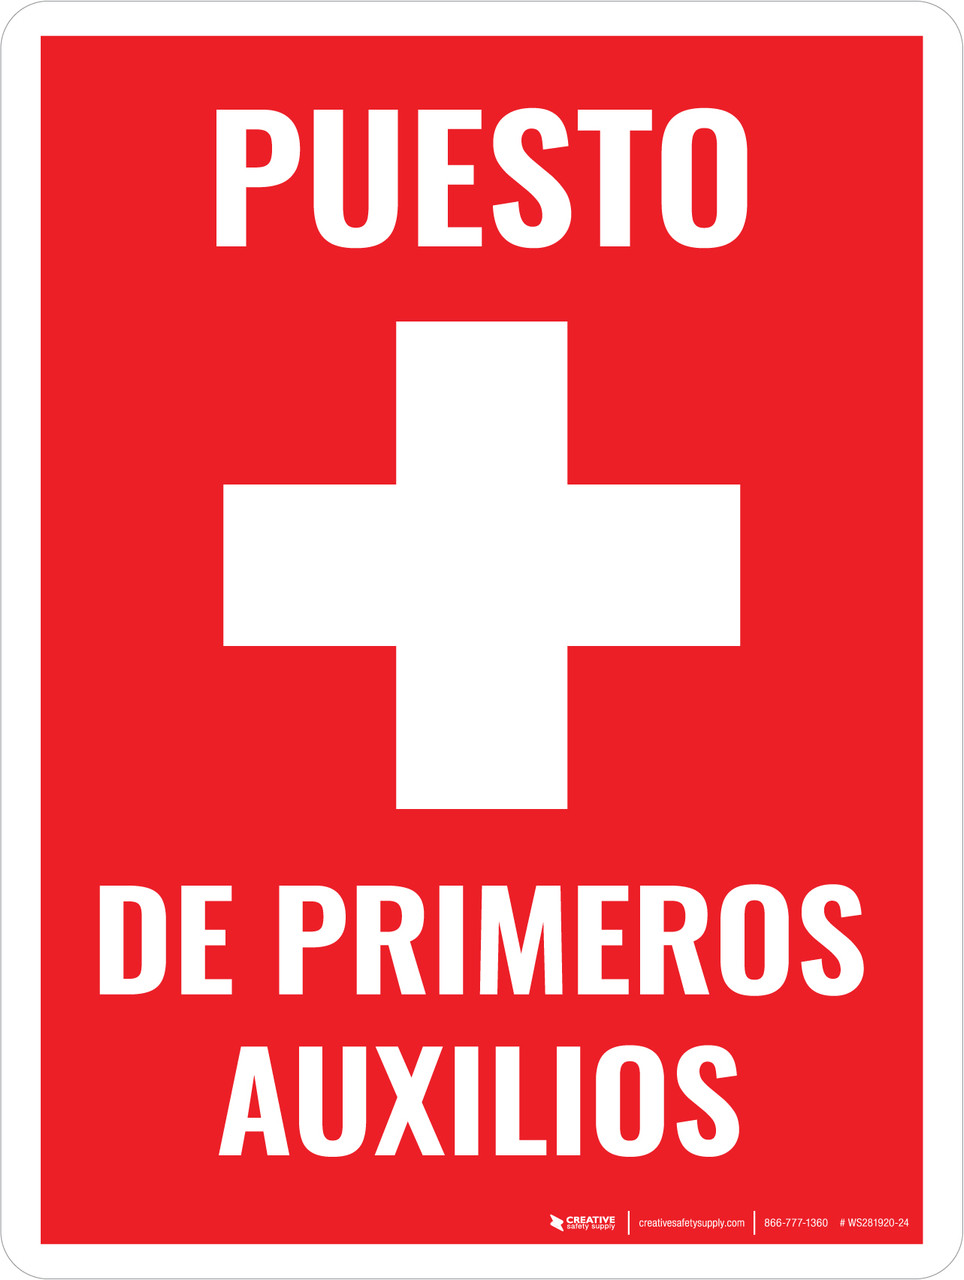 Kit de Primeros Auxilios (Con Cruz Roja) - Wall Sign